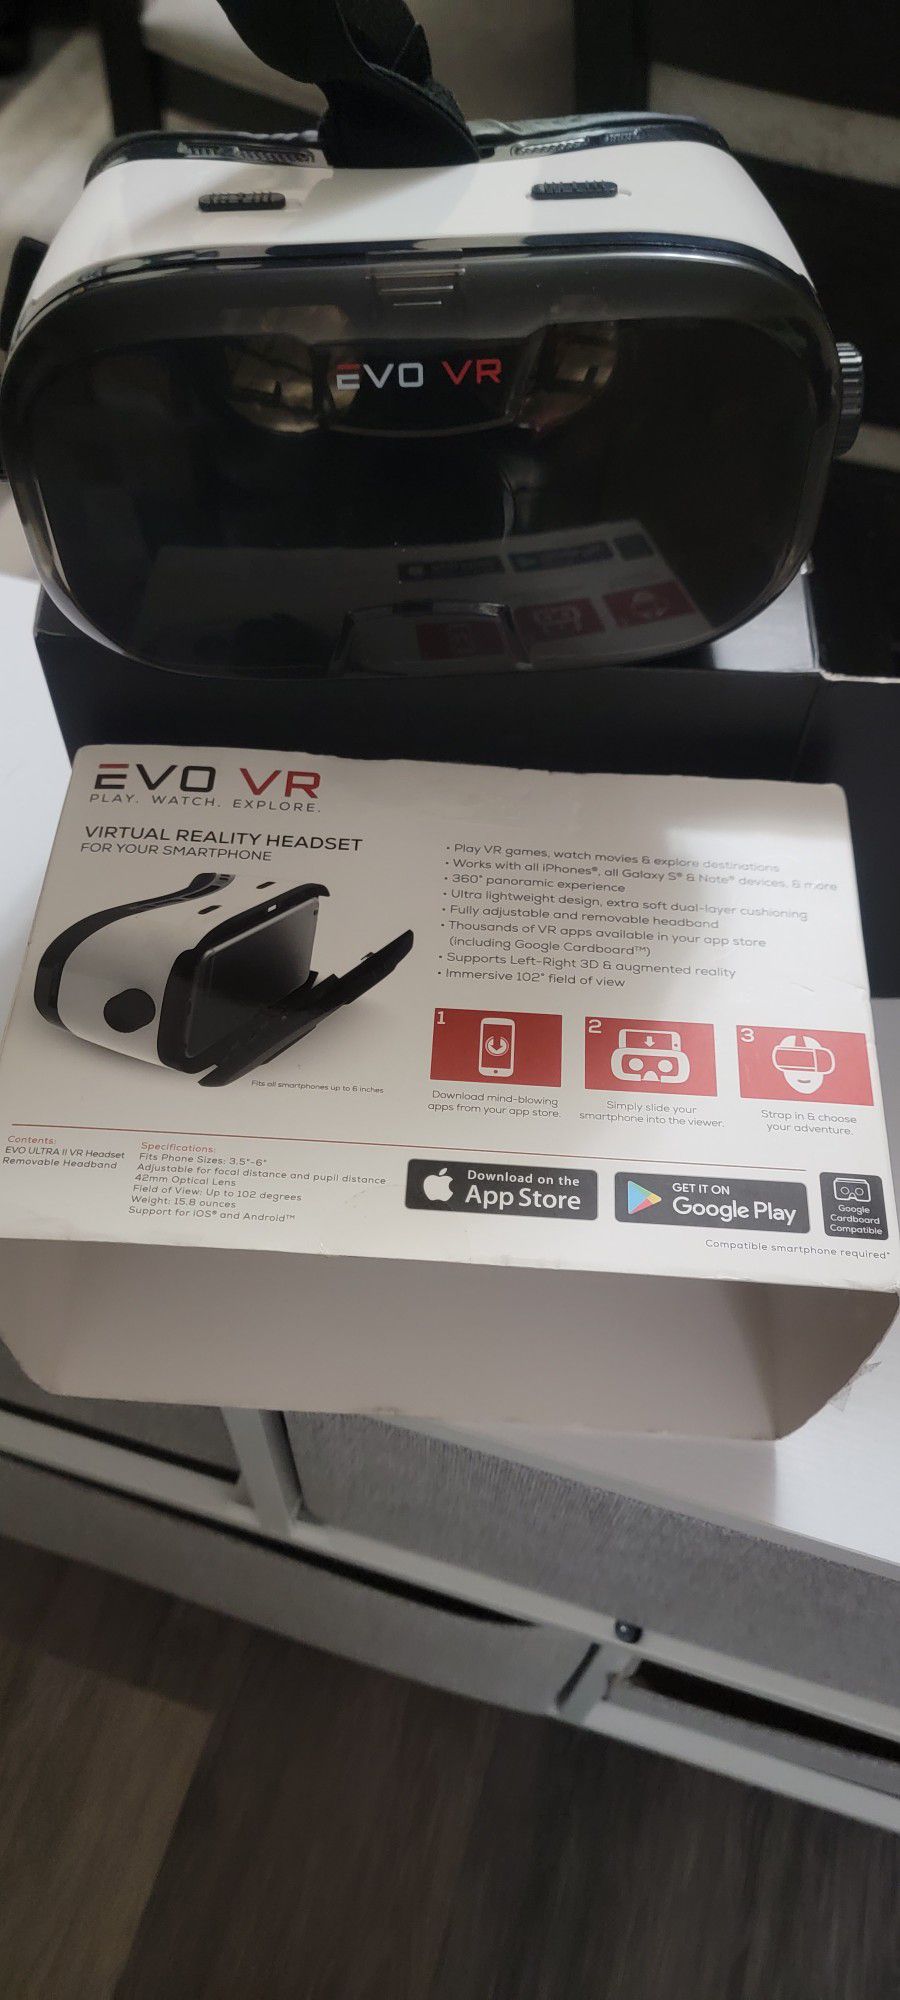 VR 